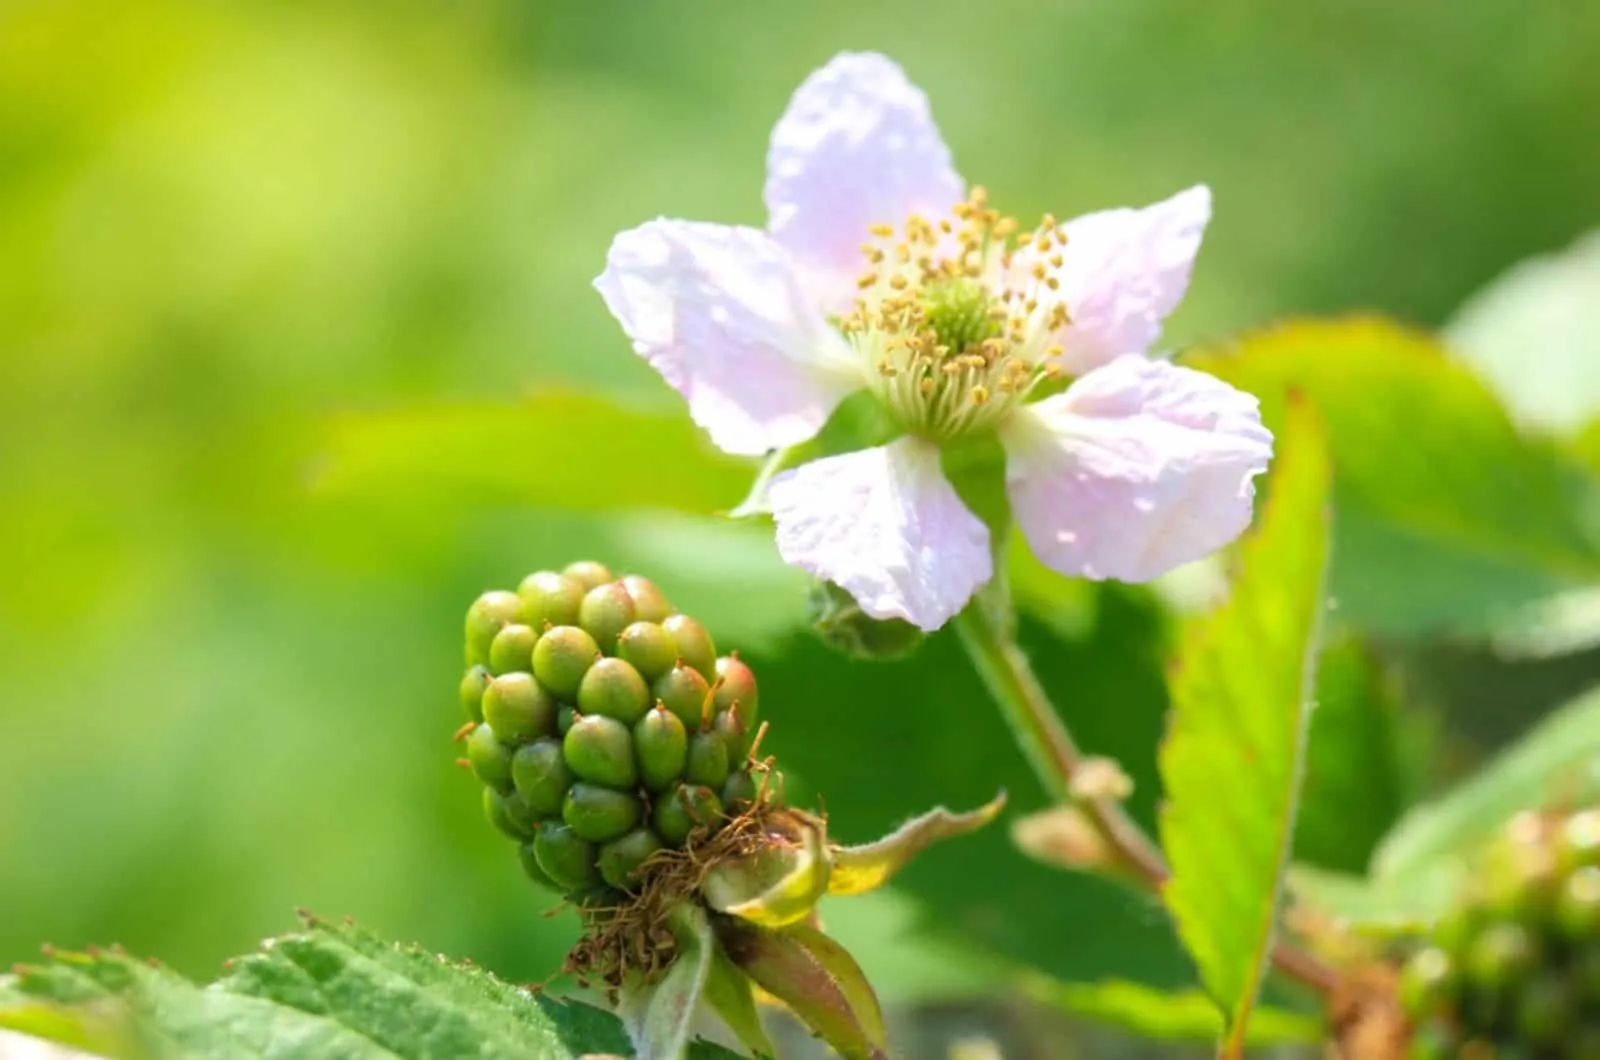 Blackberry blossoms in summer